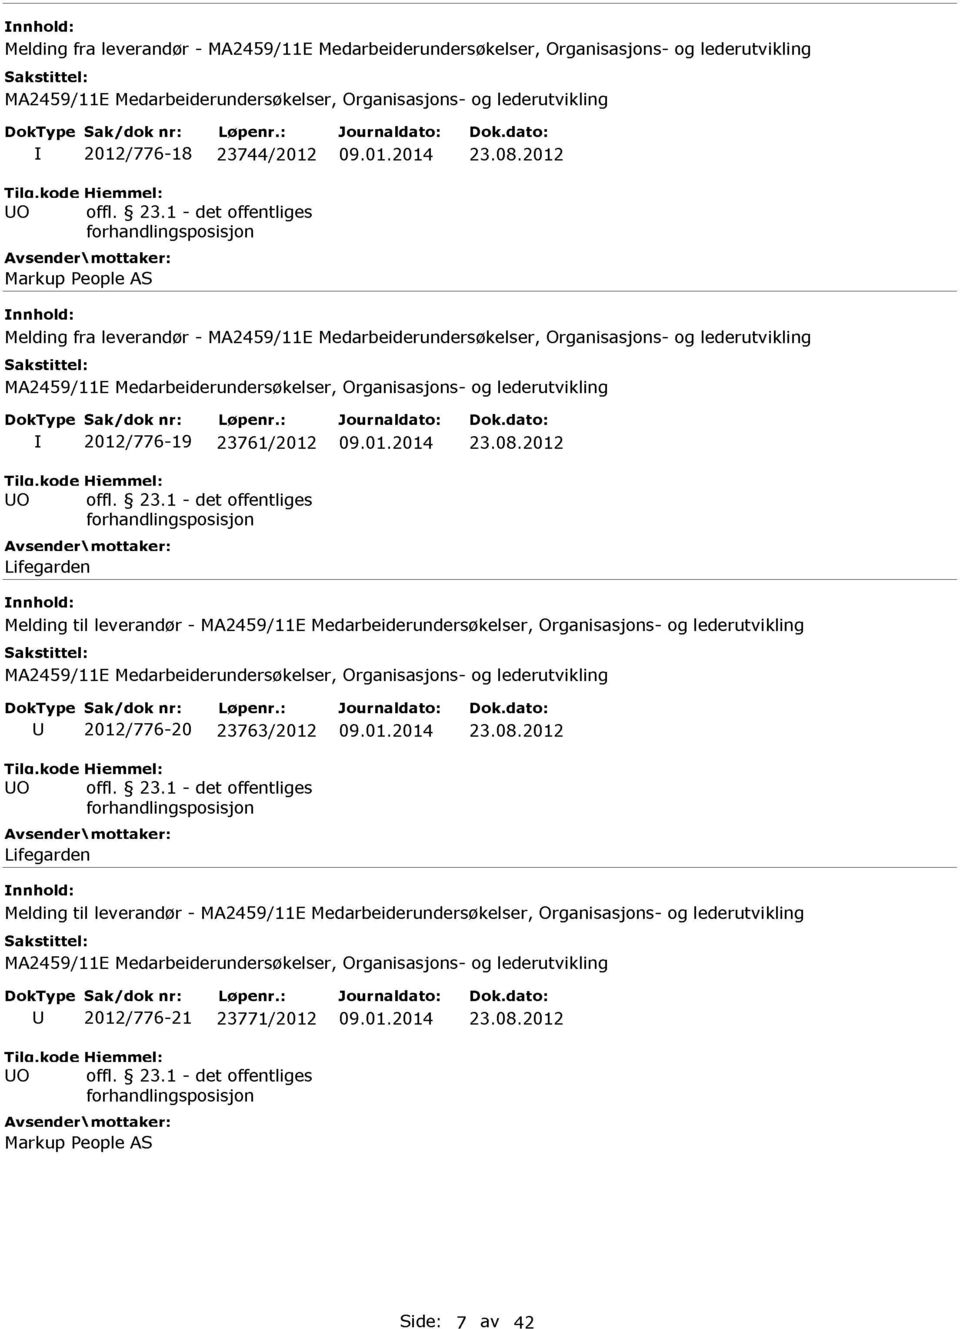 2012 Lifegarden Melding til leverandør - U 2012/776-20 23763/2012 09.01.2014 23.08.